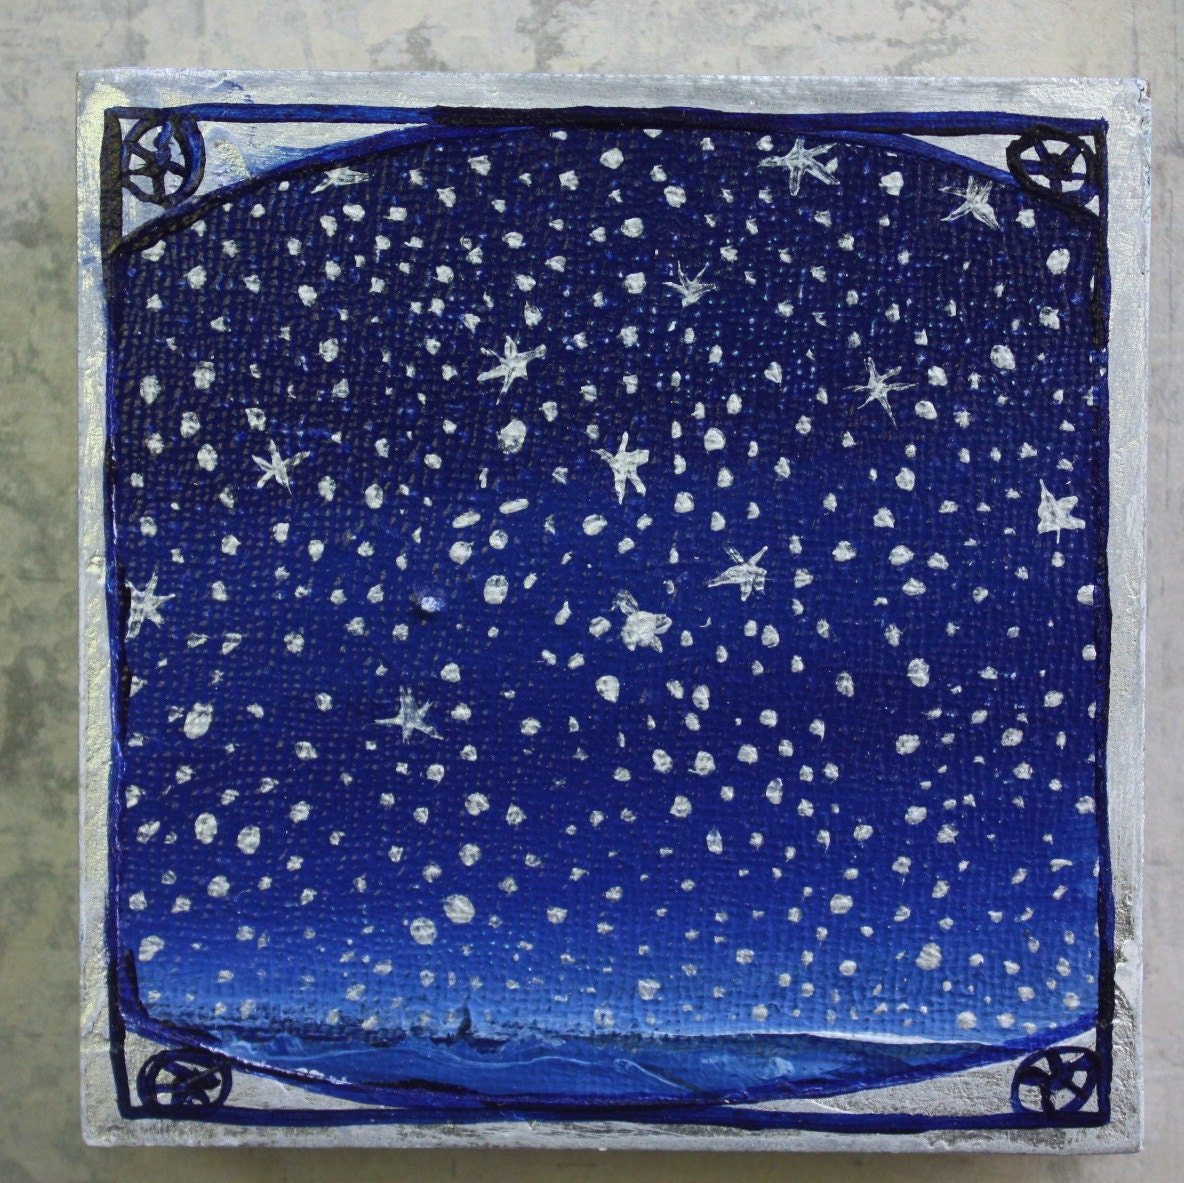 Stars over water 4" square - roseymorris